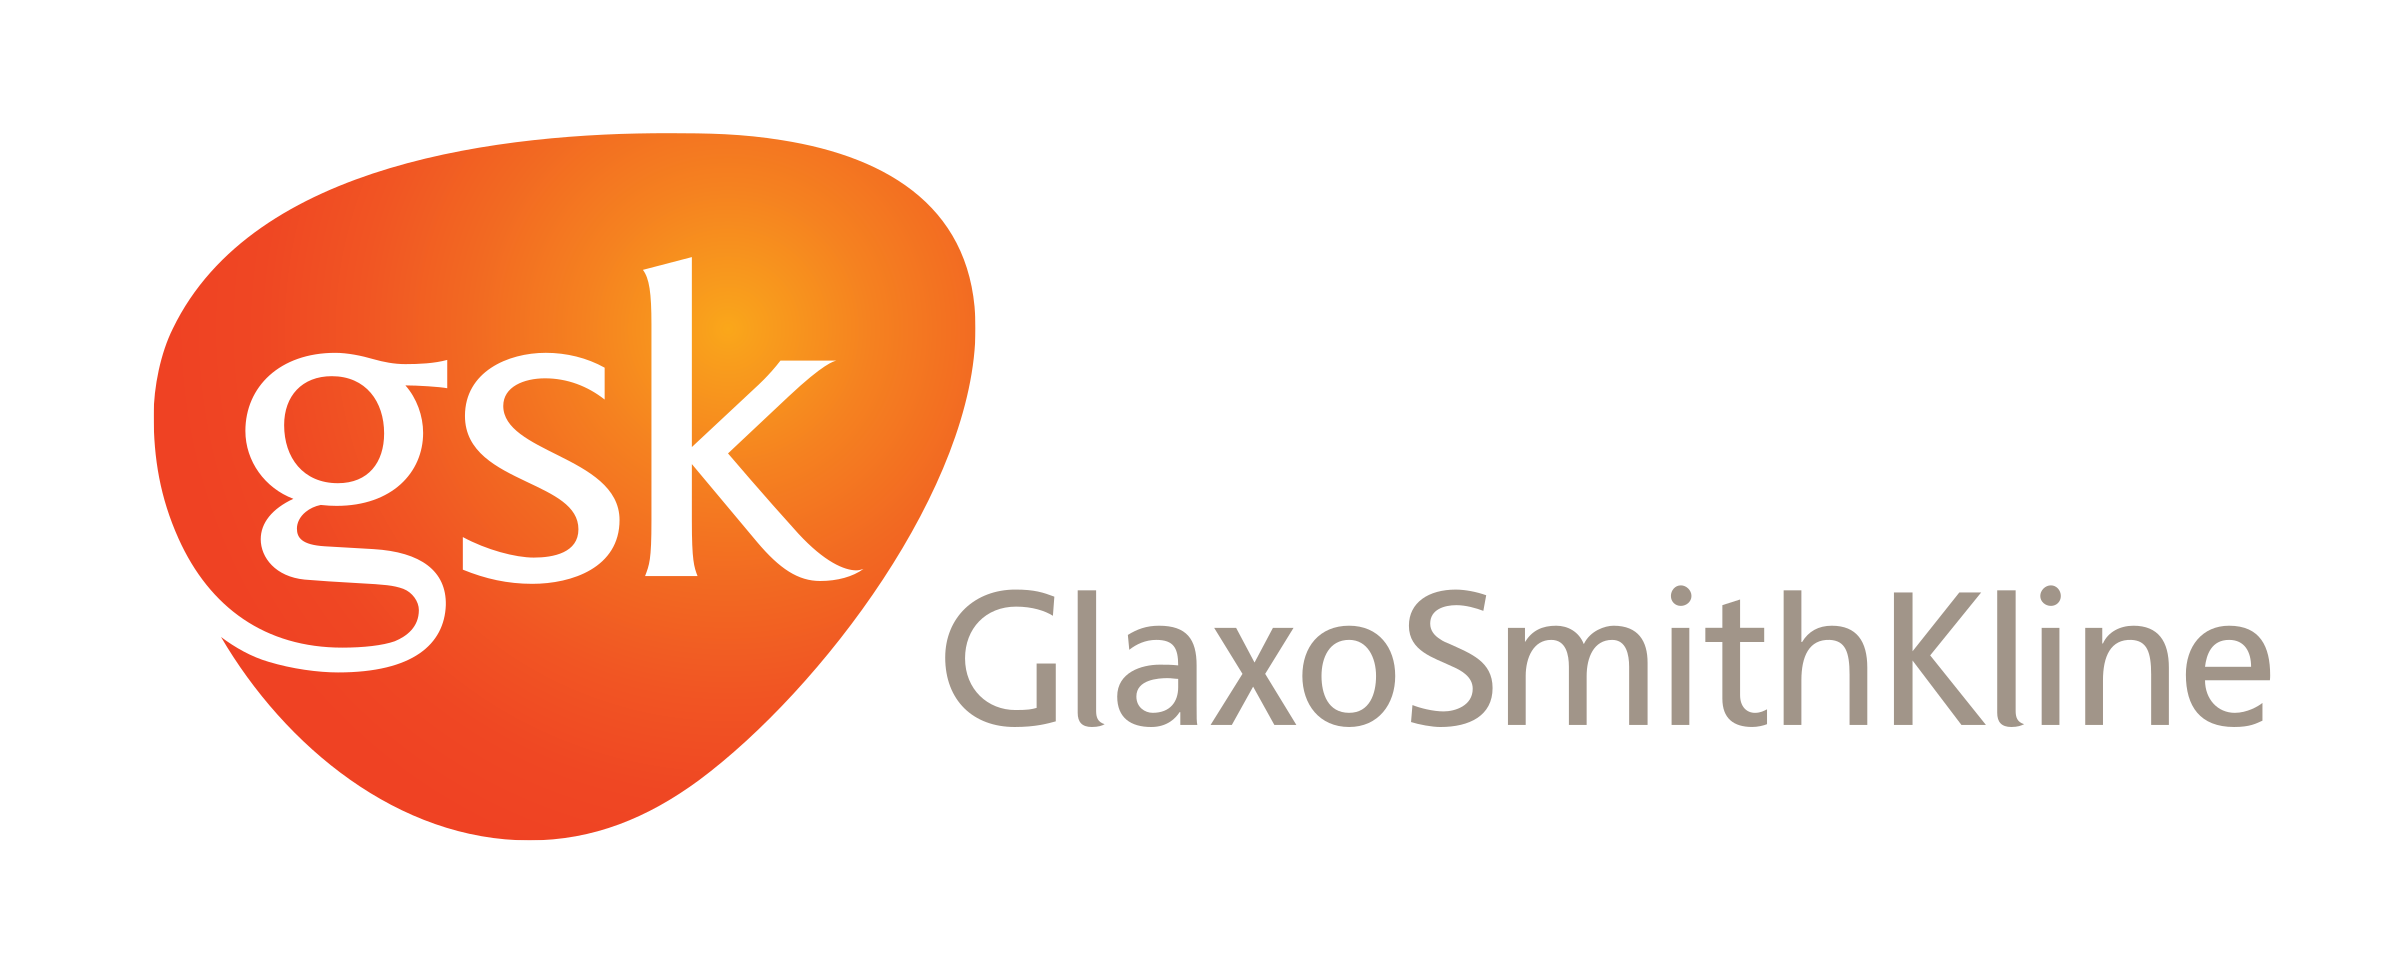 glaxosmithkline-logo-png-transparent.png